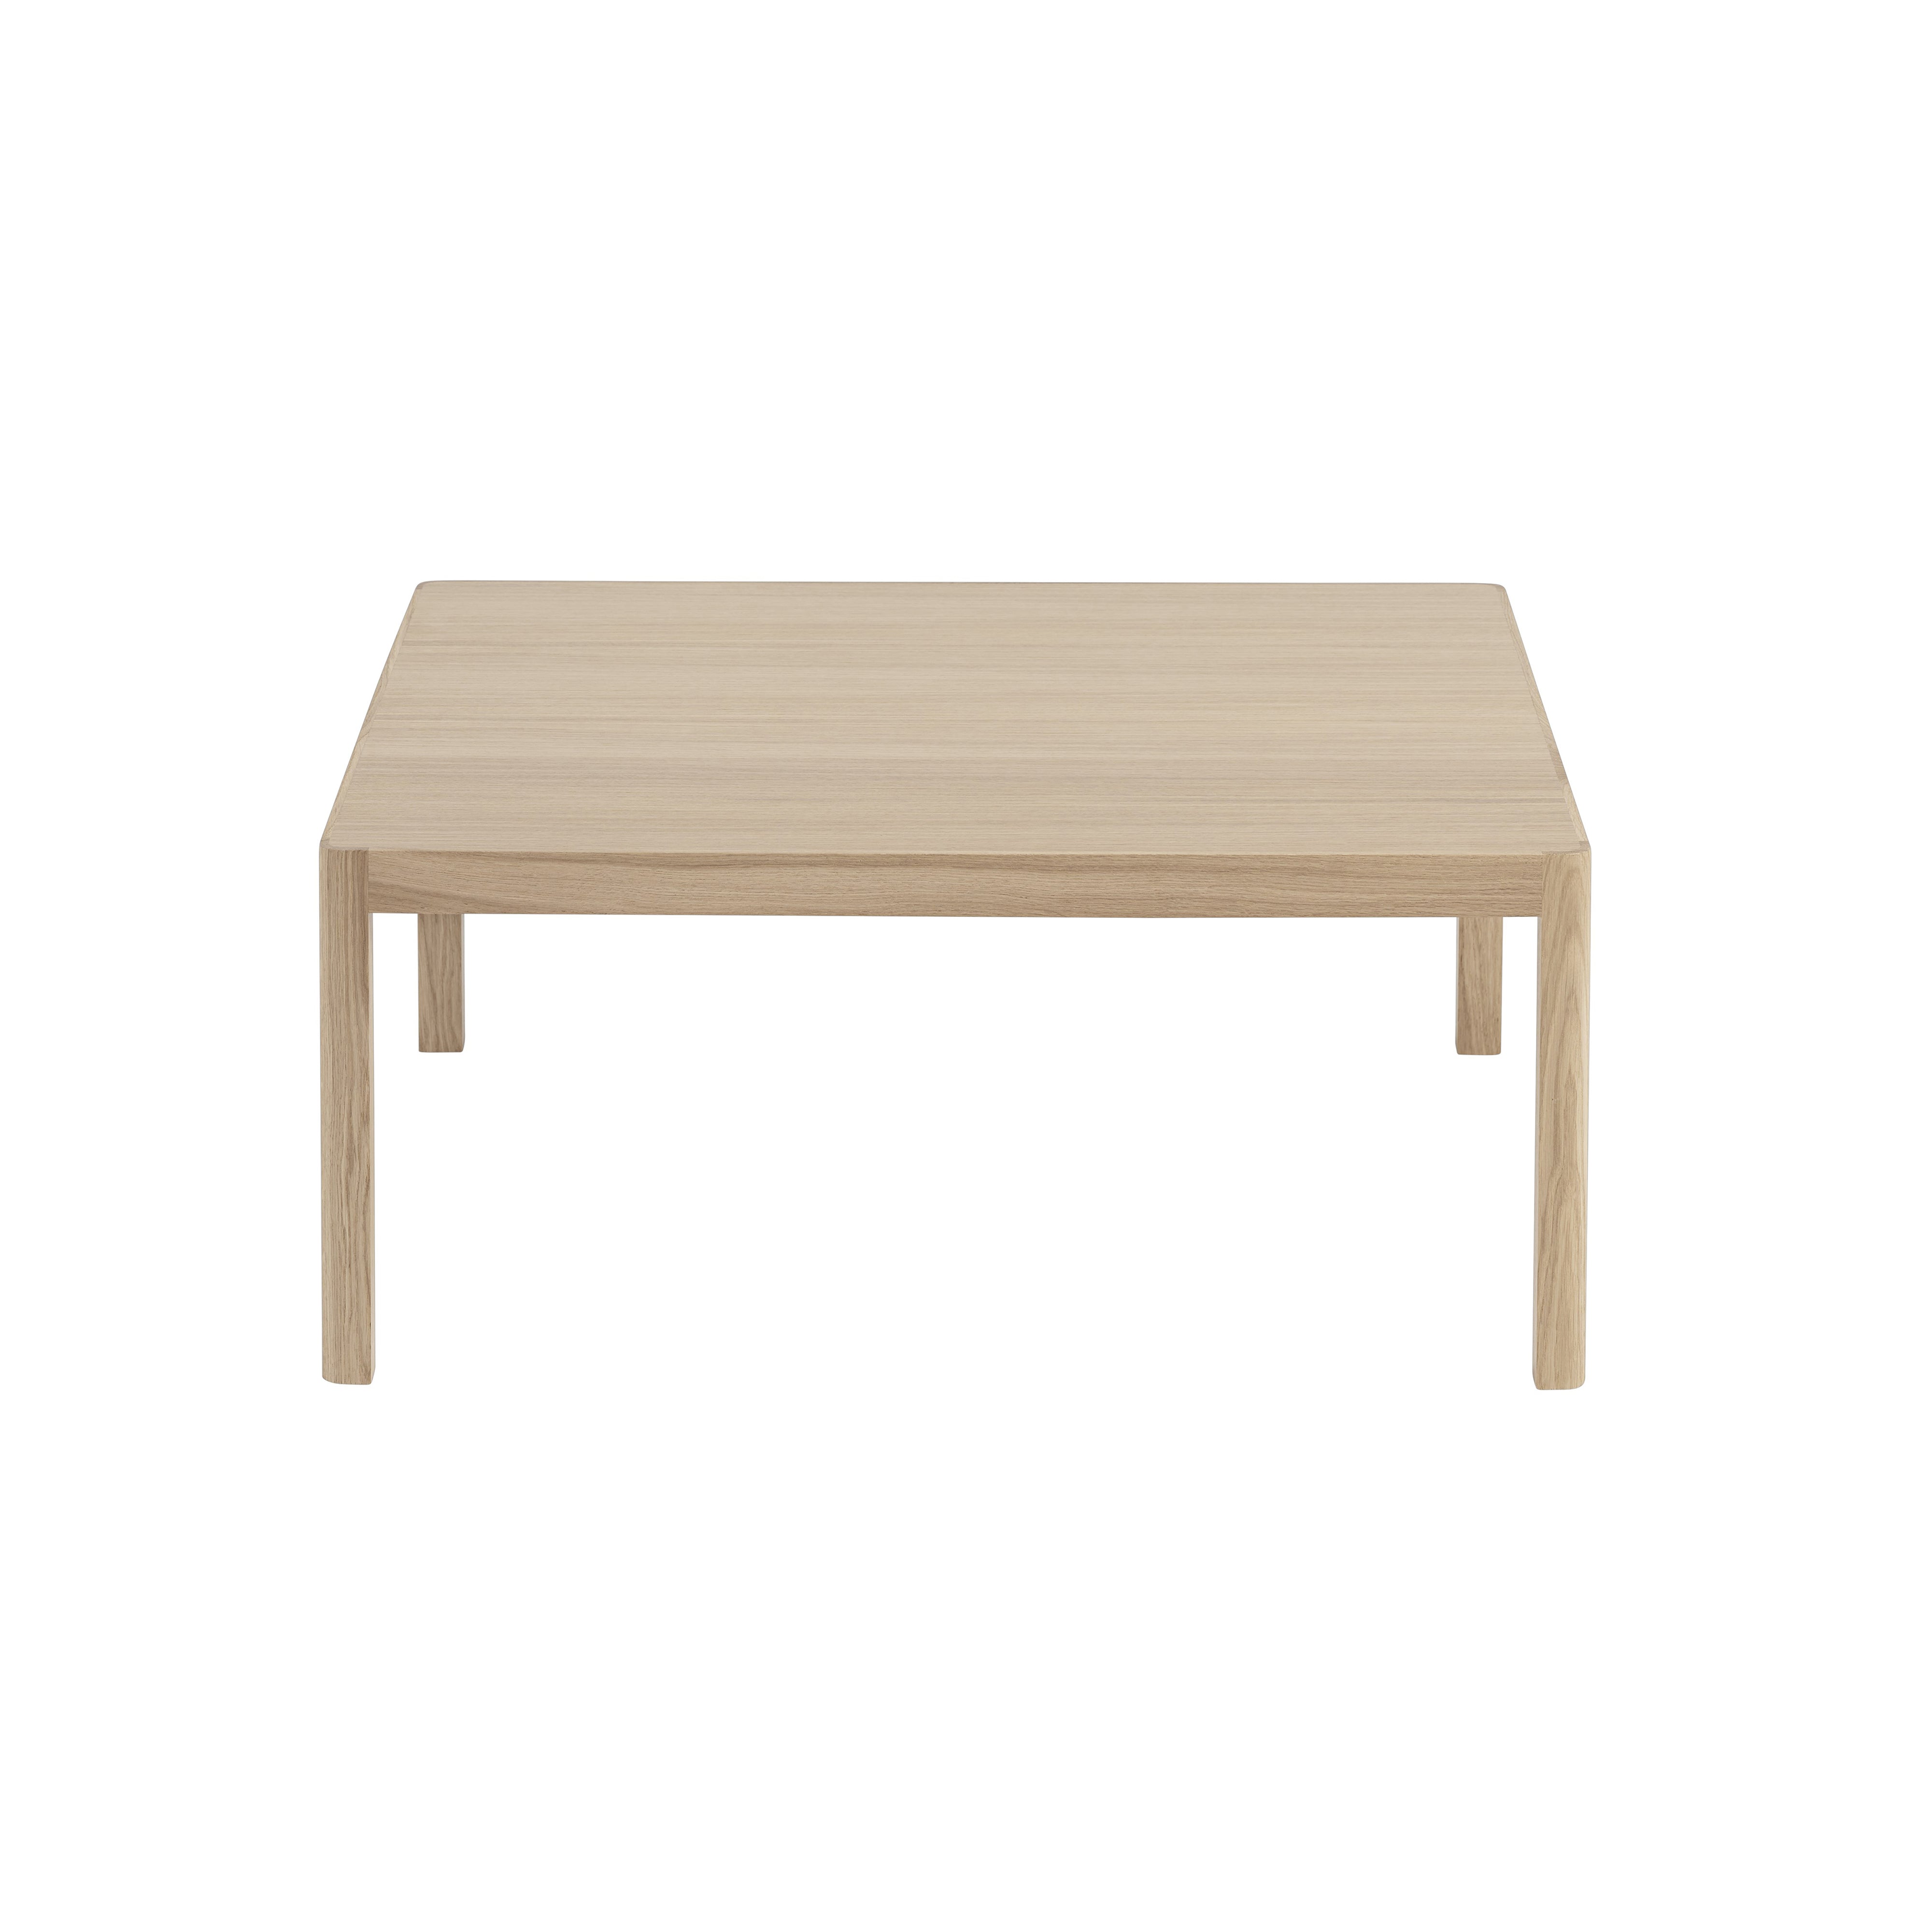 Workshop Coffee Table: Square + Oak